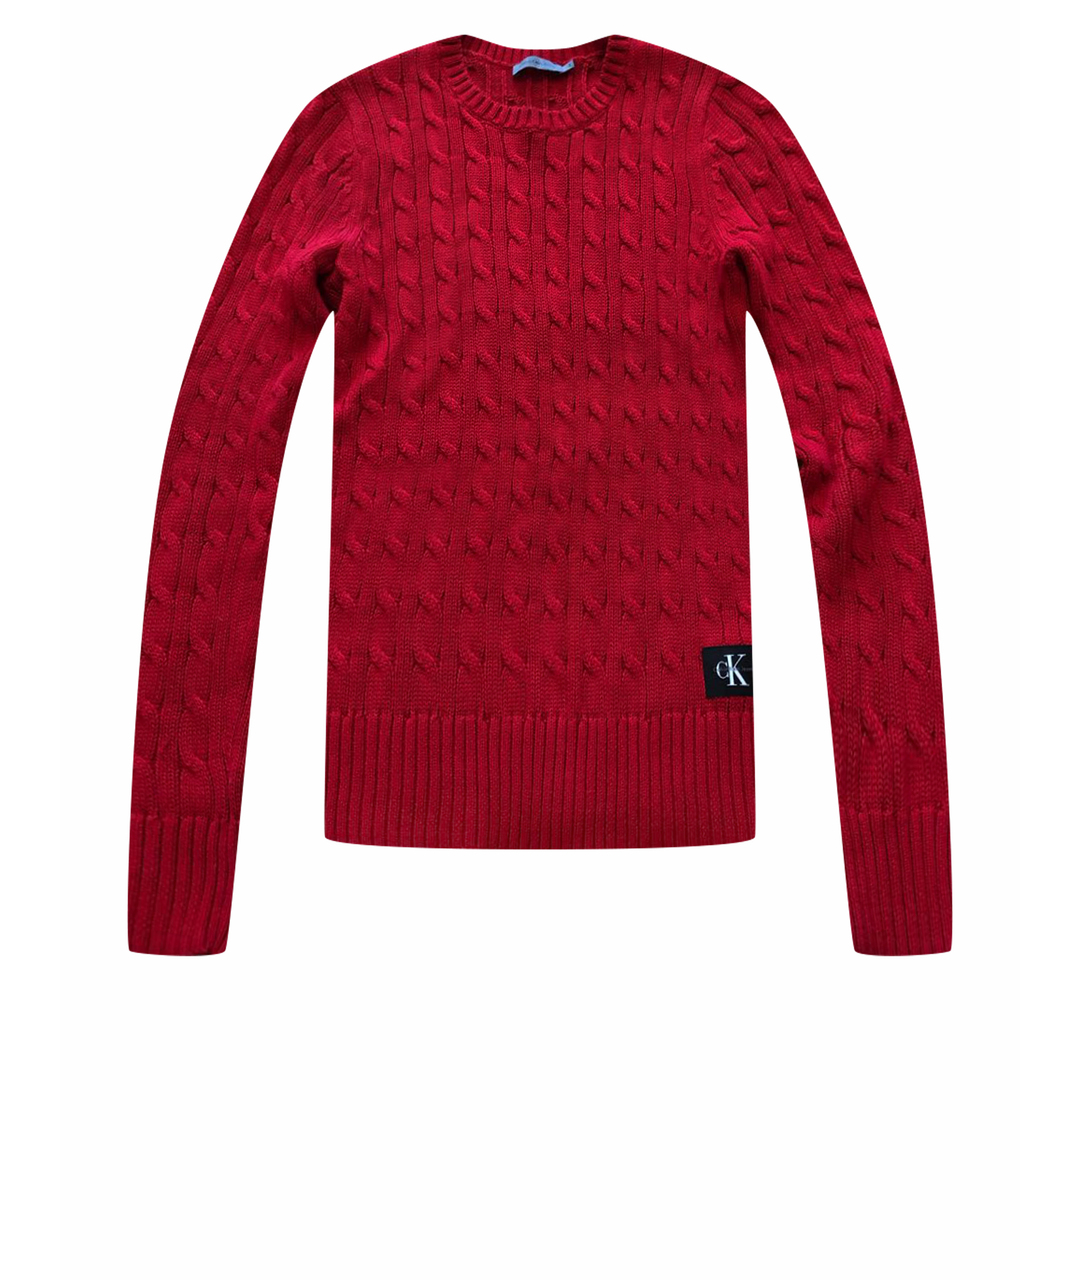 CALVIN KLEIN JEANS Красный хлопковый джемпер / свитер, фото 1